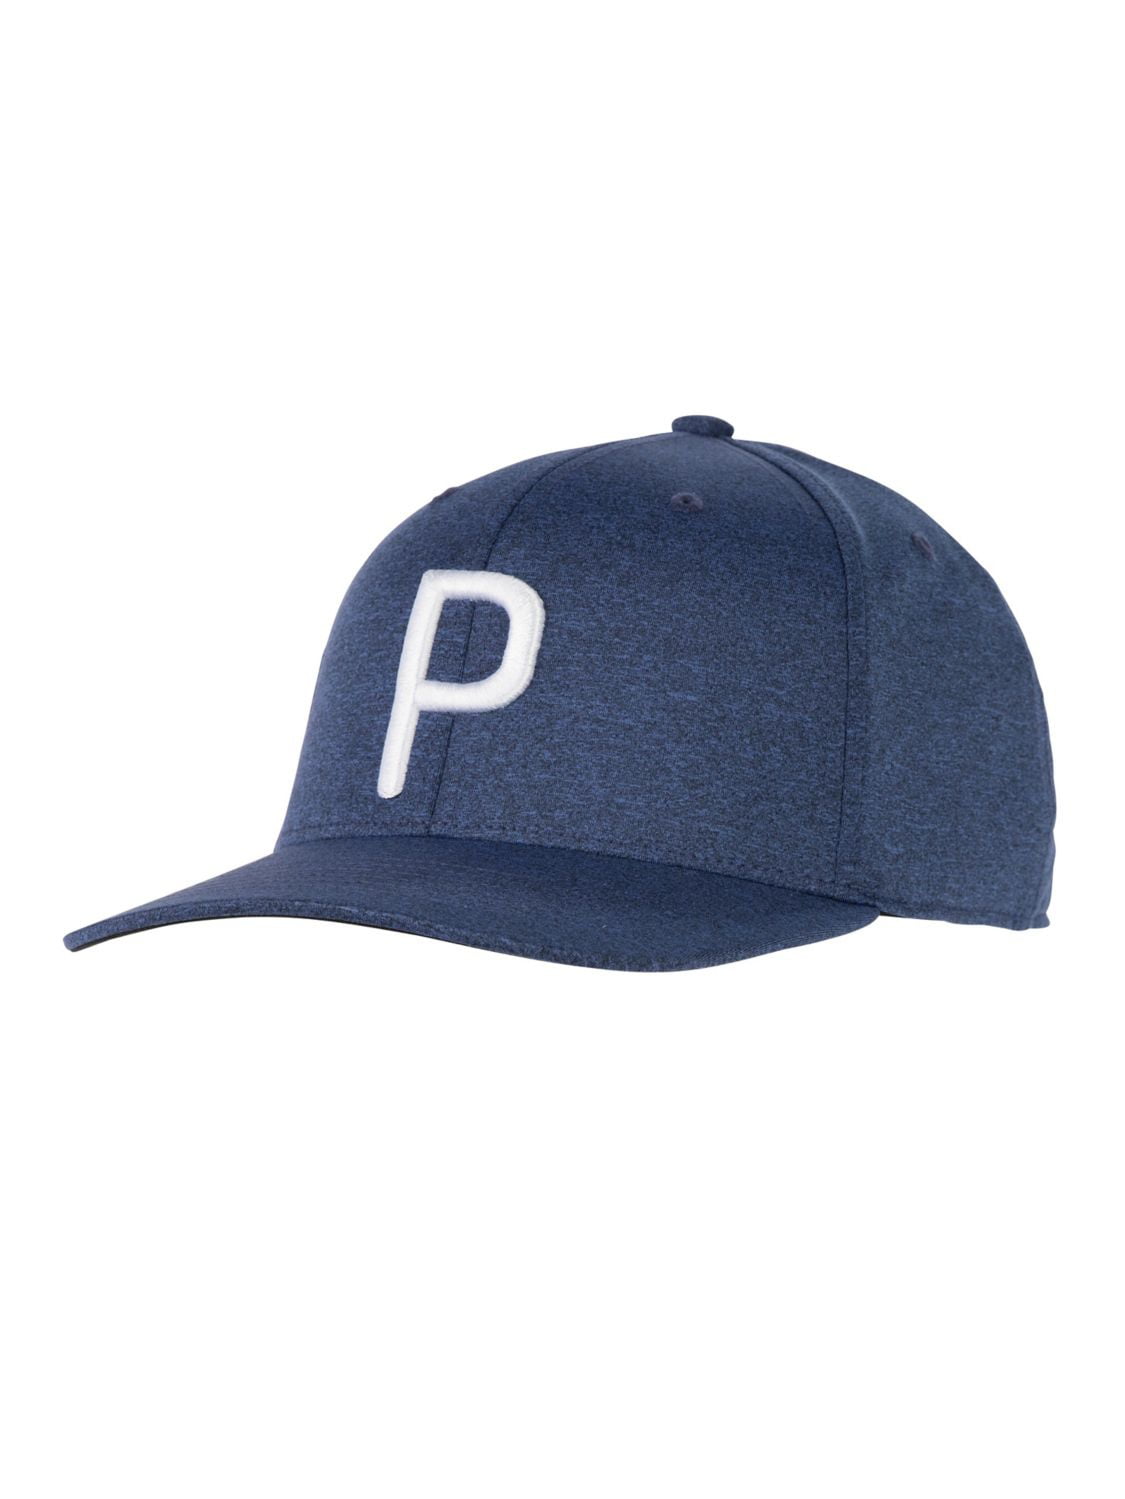 puma snapback hat